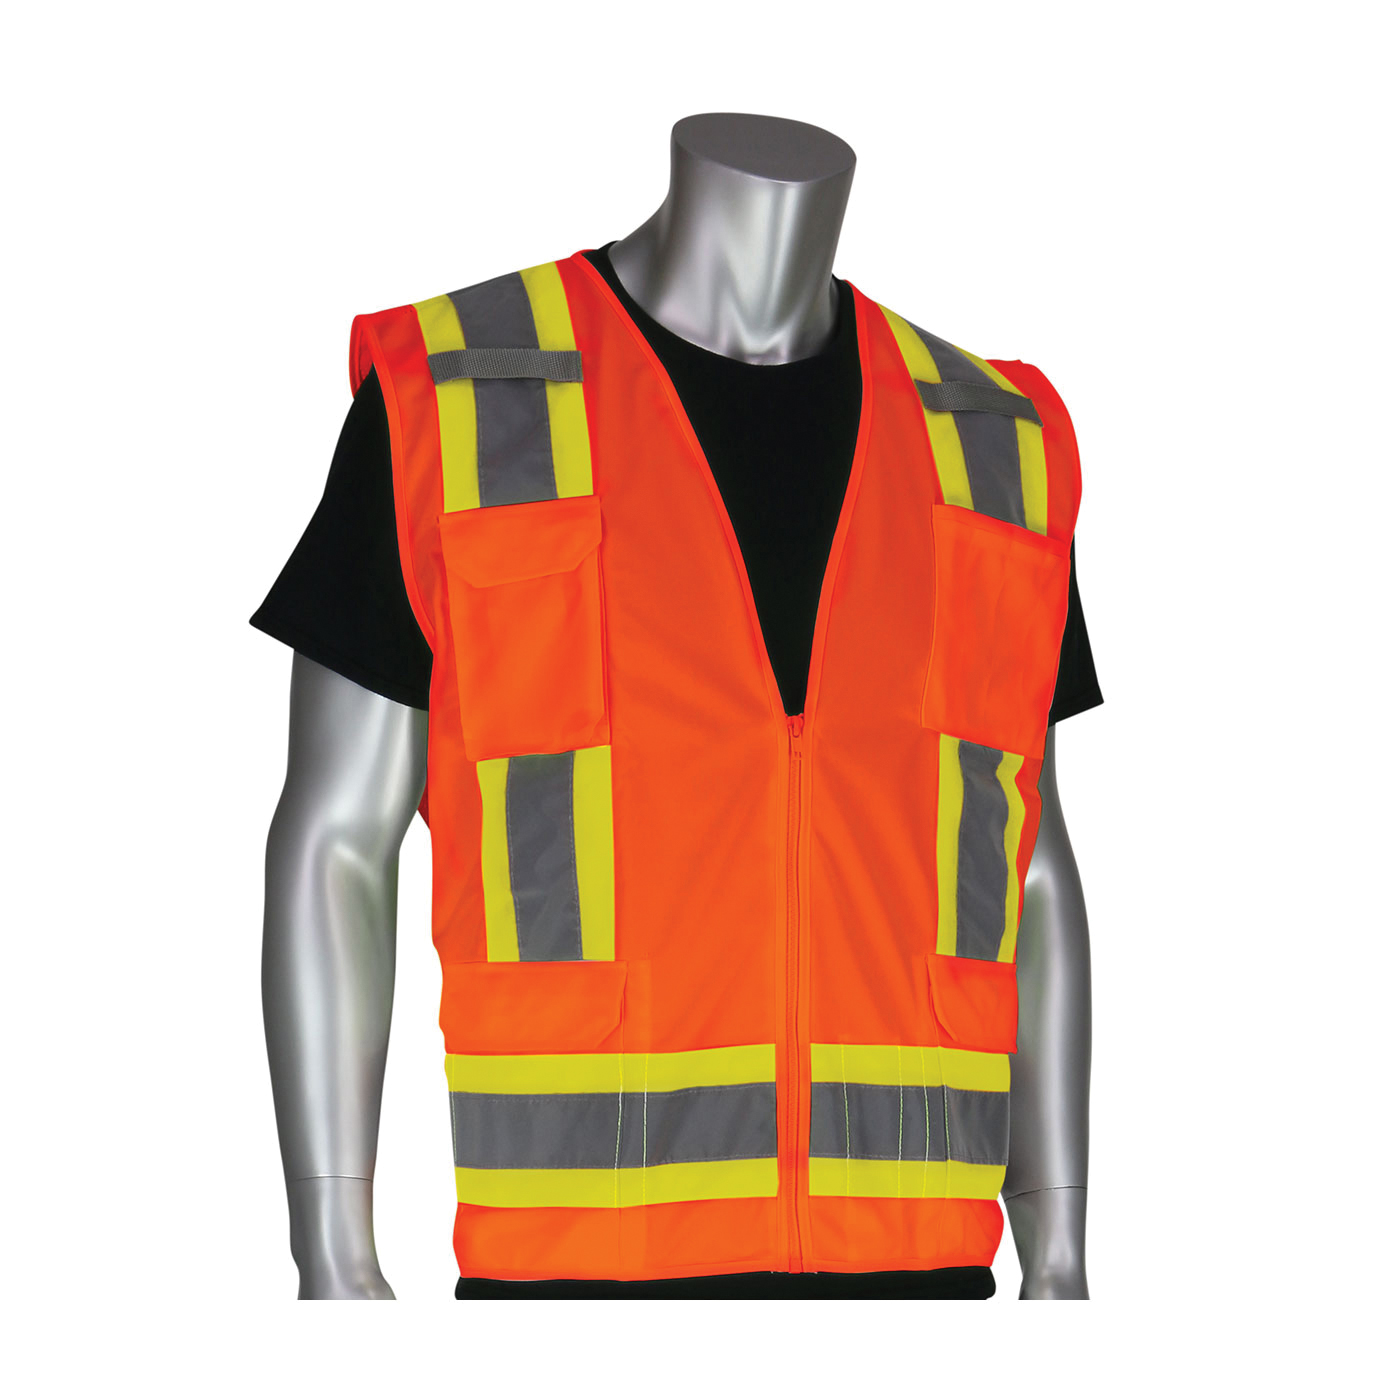 PIP® 302-0500-ORG/XL 2-Tone Surveyor Safety Vest, XL, Hi-Viz Orange, Polyester/Solid Tricot, Zipper Closure, 11 Pockets, ANSI Class: Class 2, Specifications Met: ANSI 107 Type R